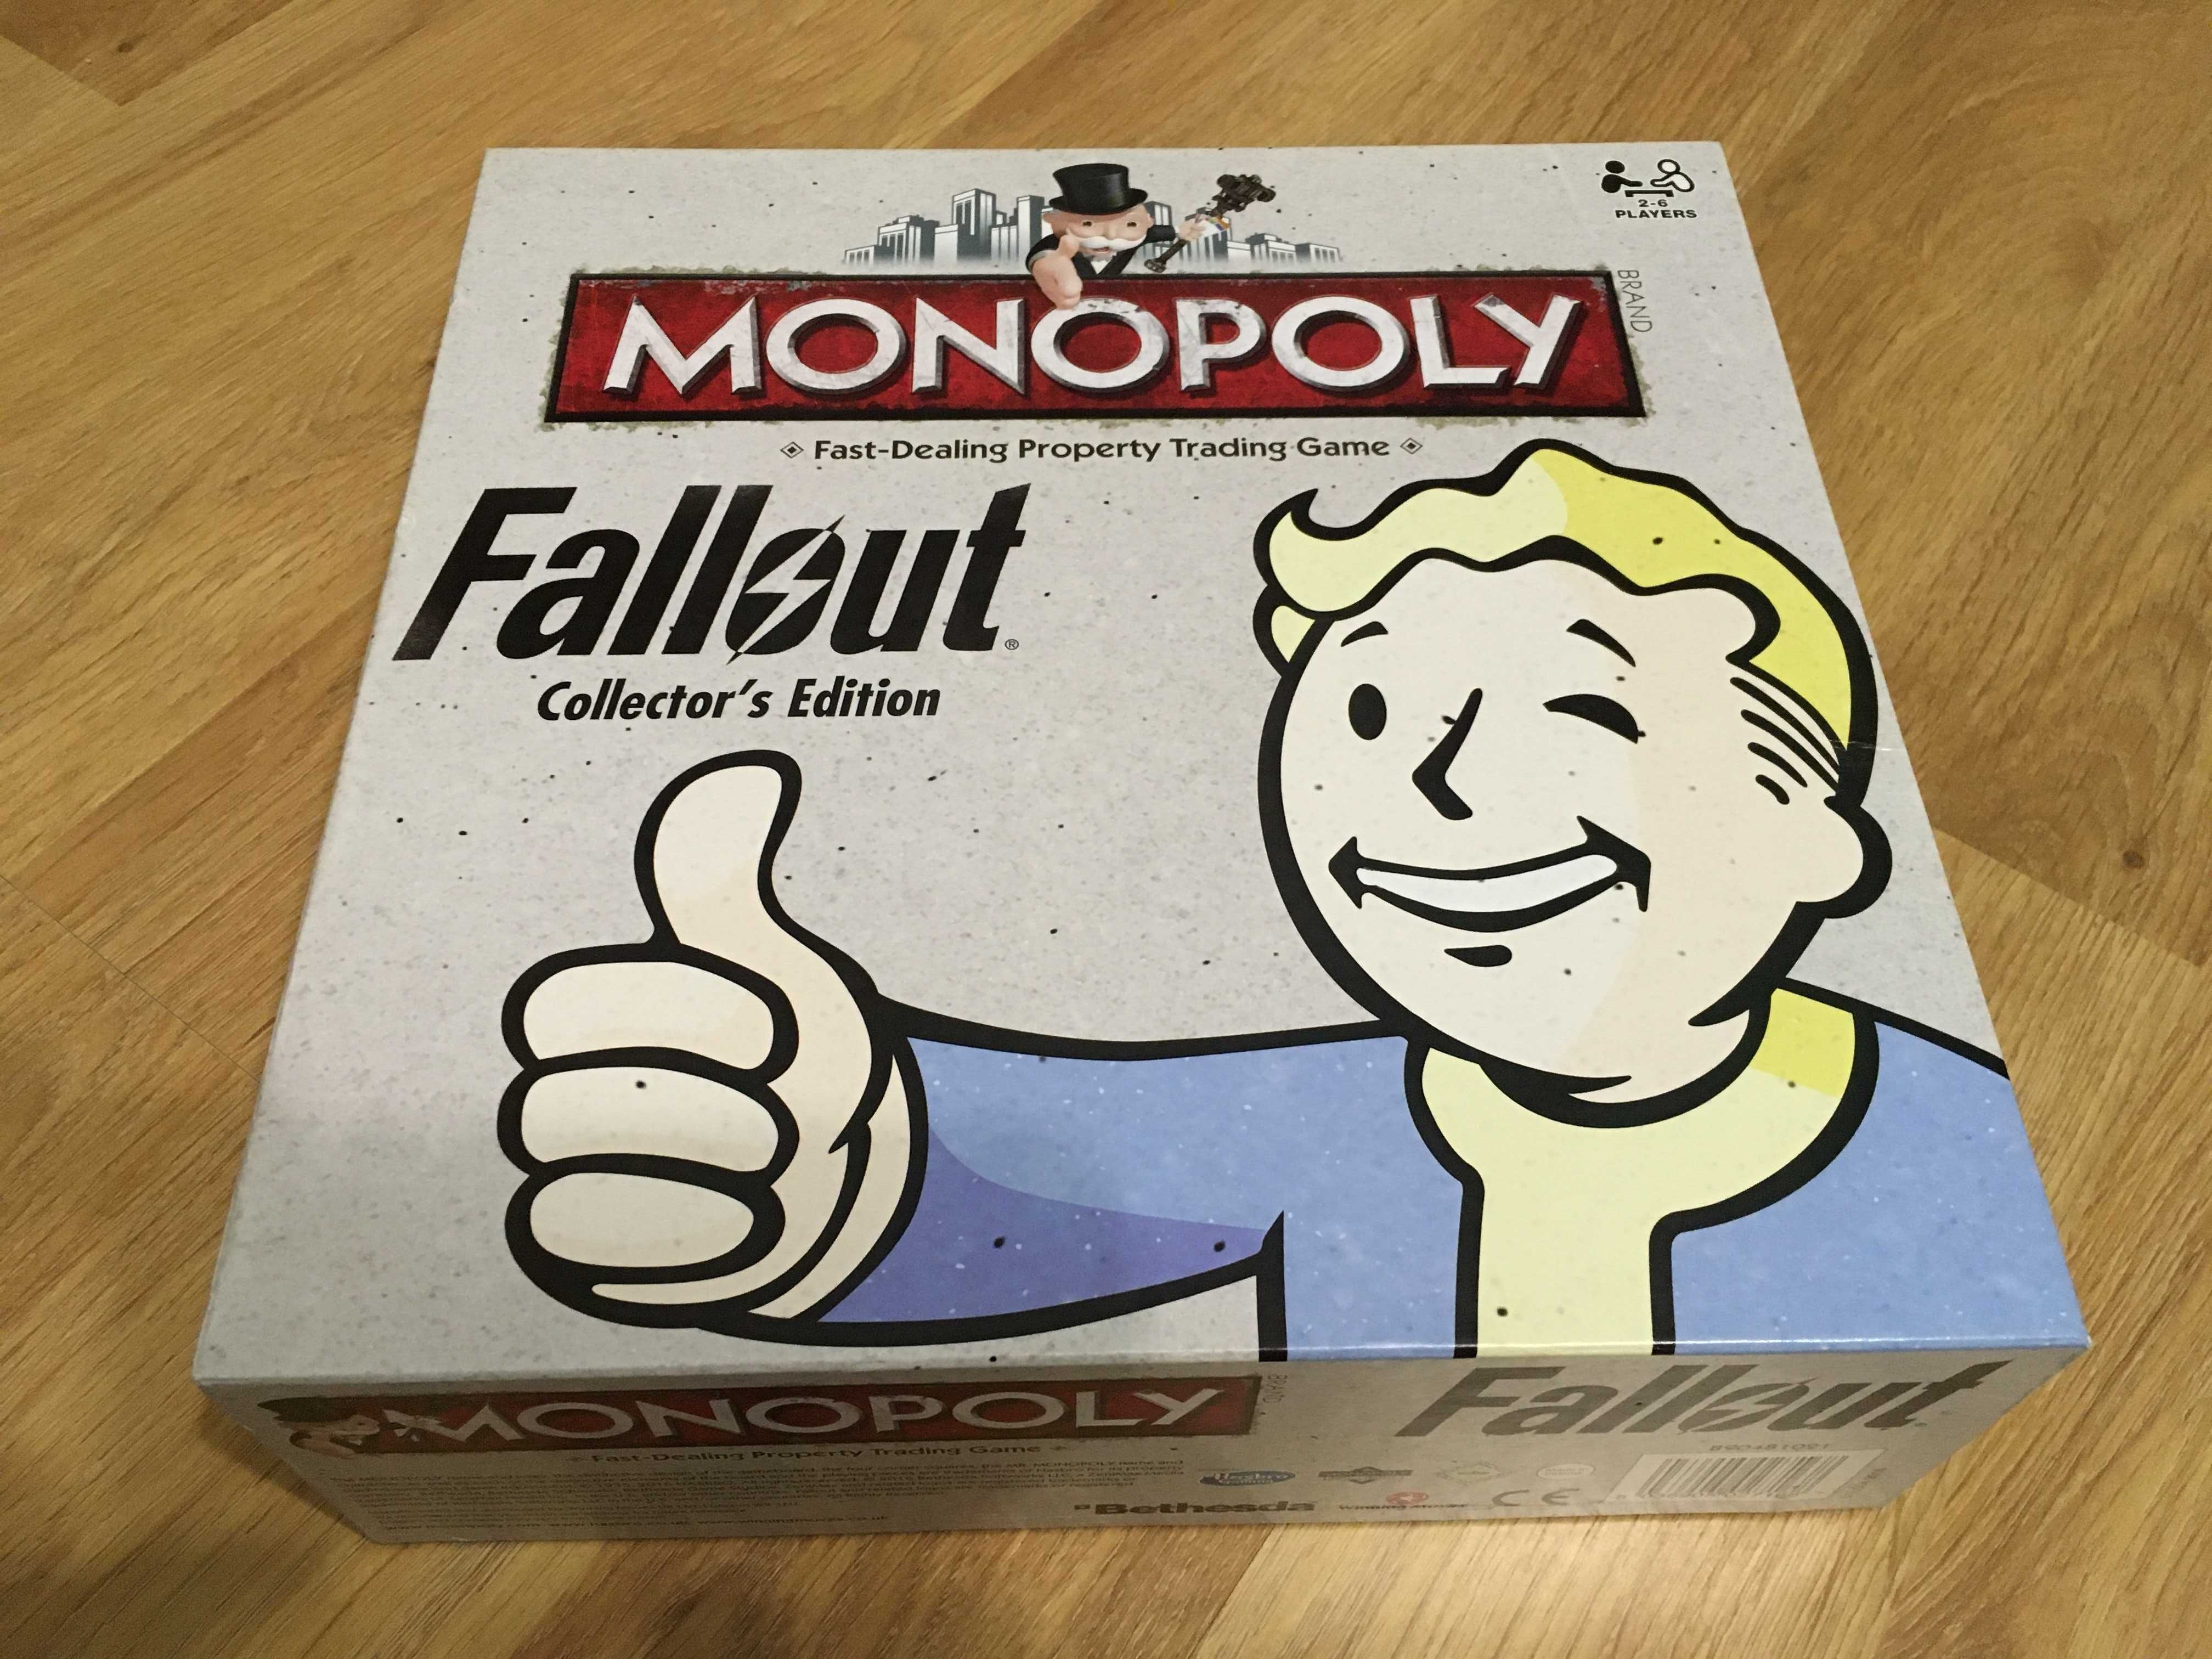 Монополия: Fallout (читать описание!)